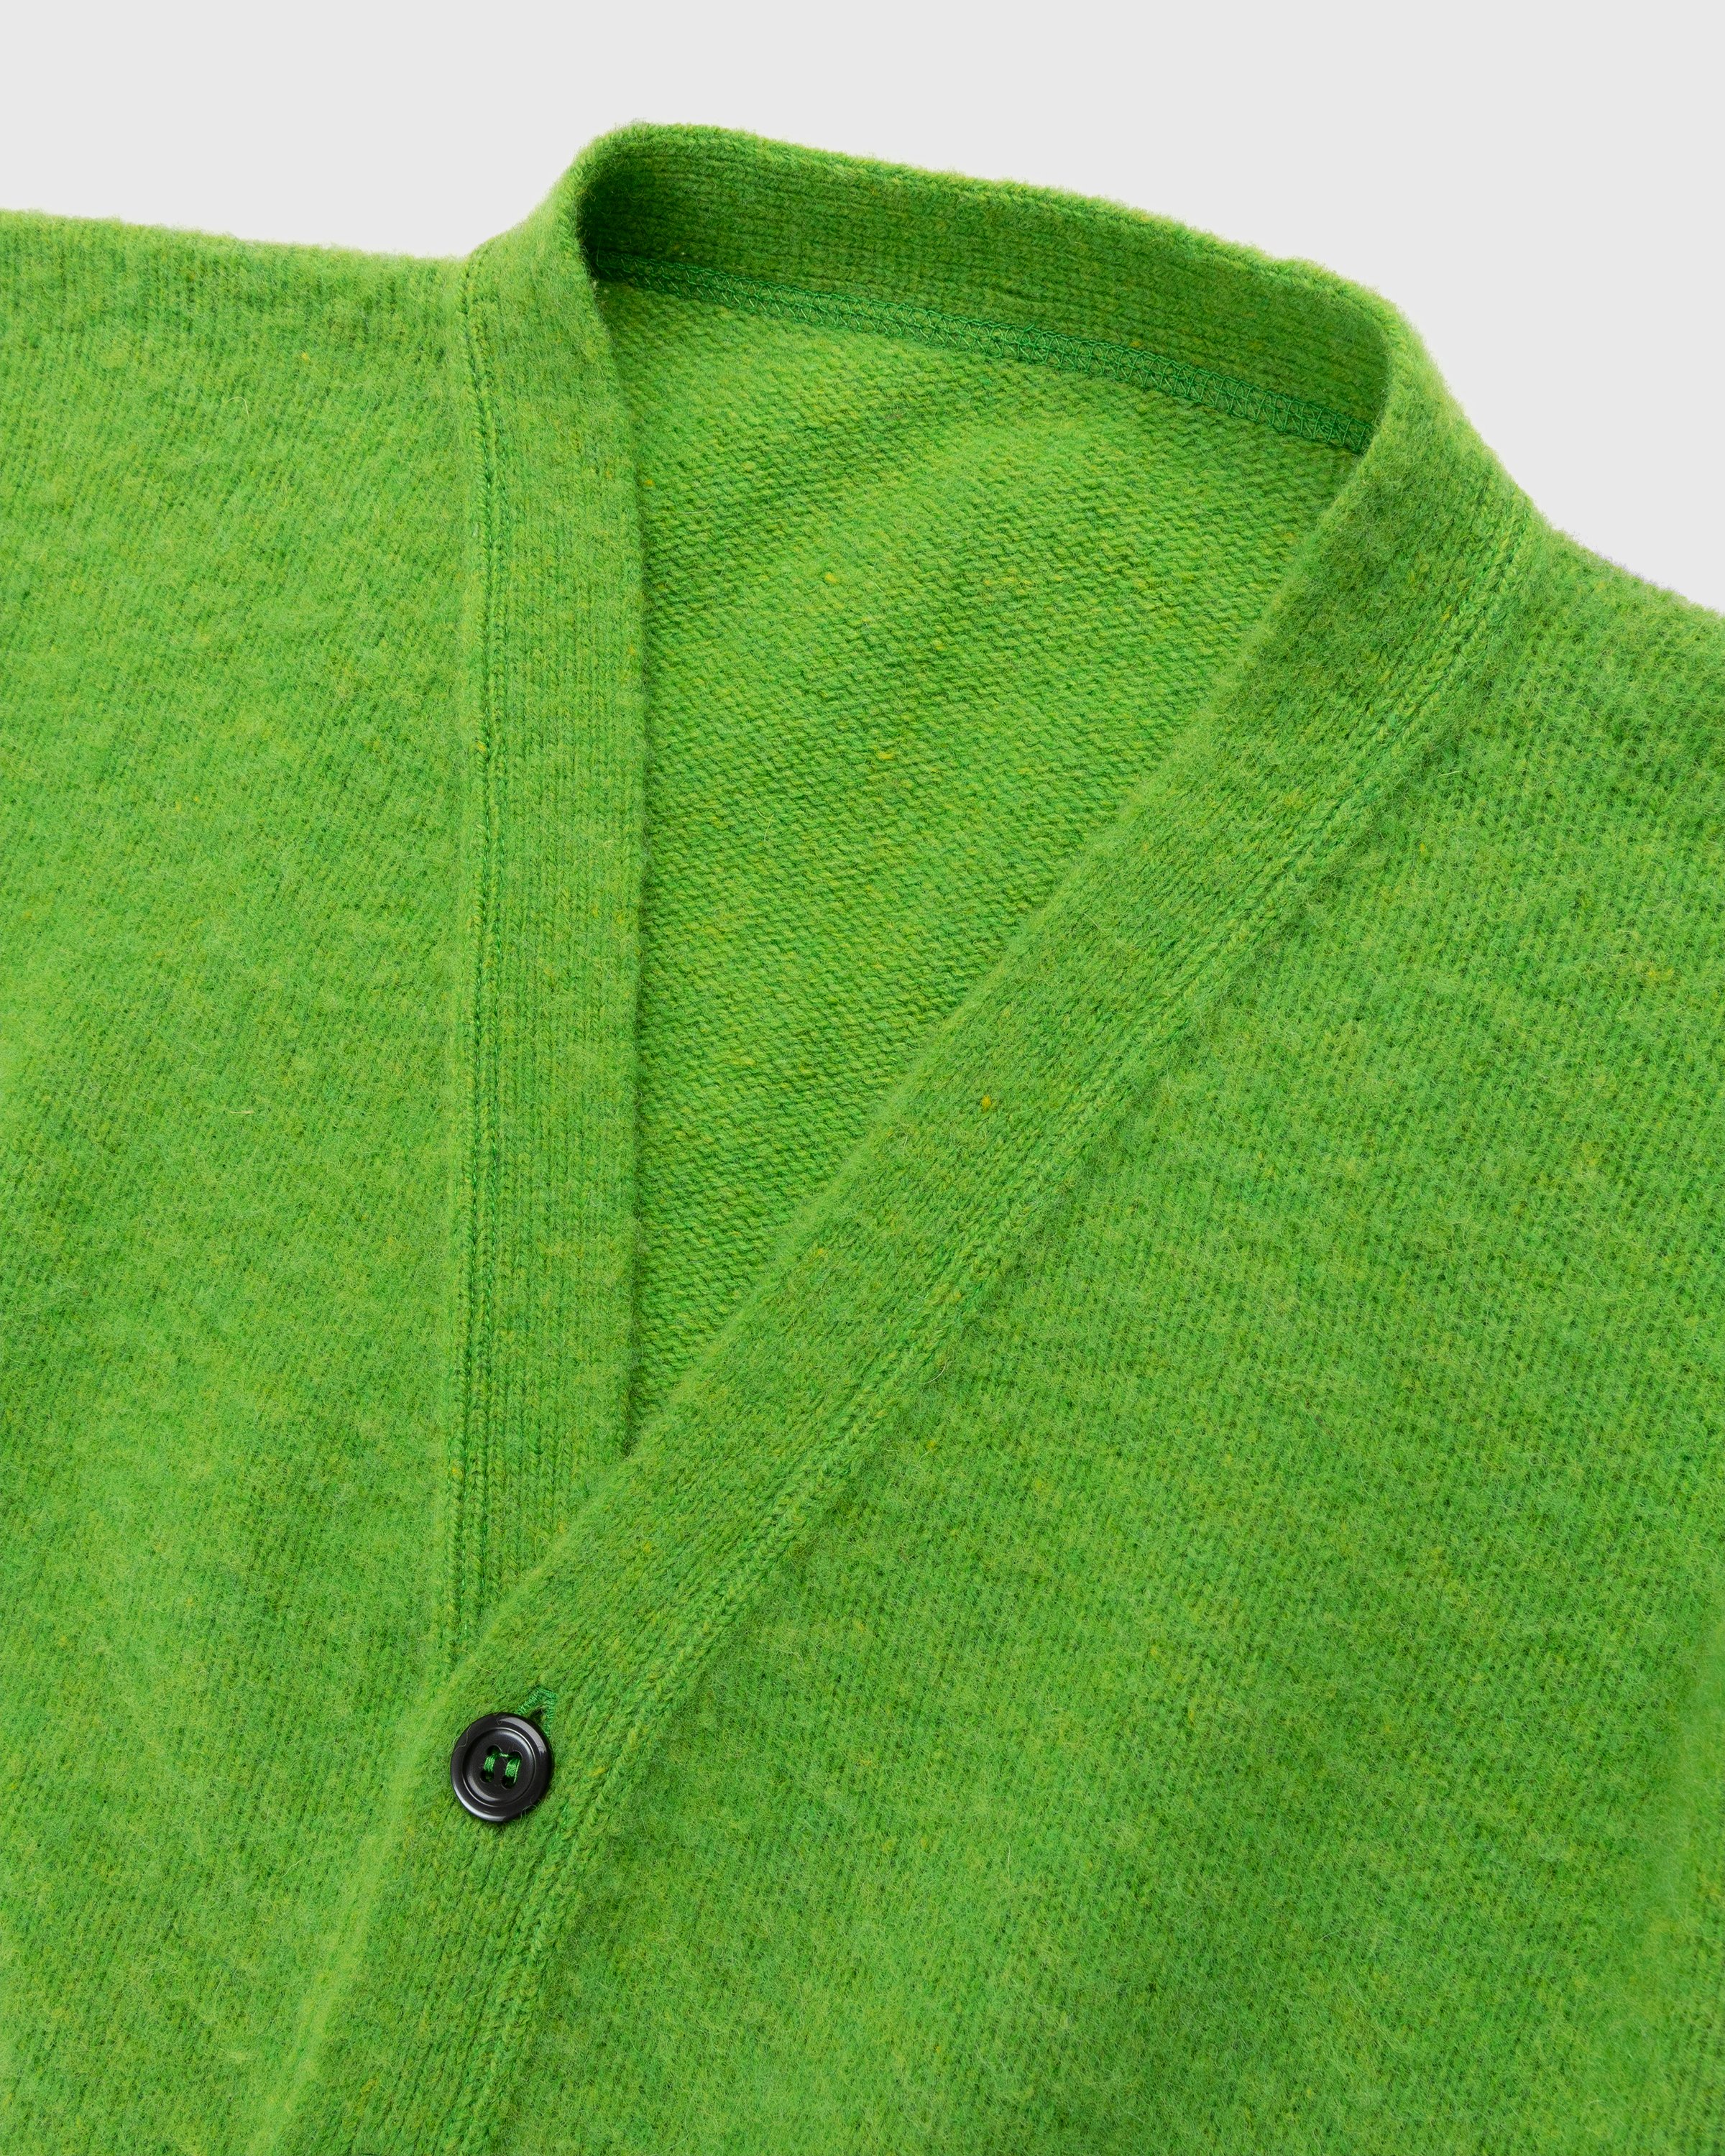 J. Press x Highsnobiety - Shaggy Dog Cardigan Green - Clothing - Green - Image 3